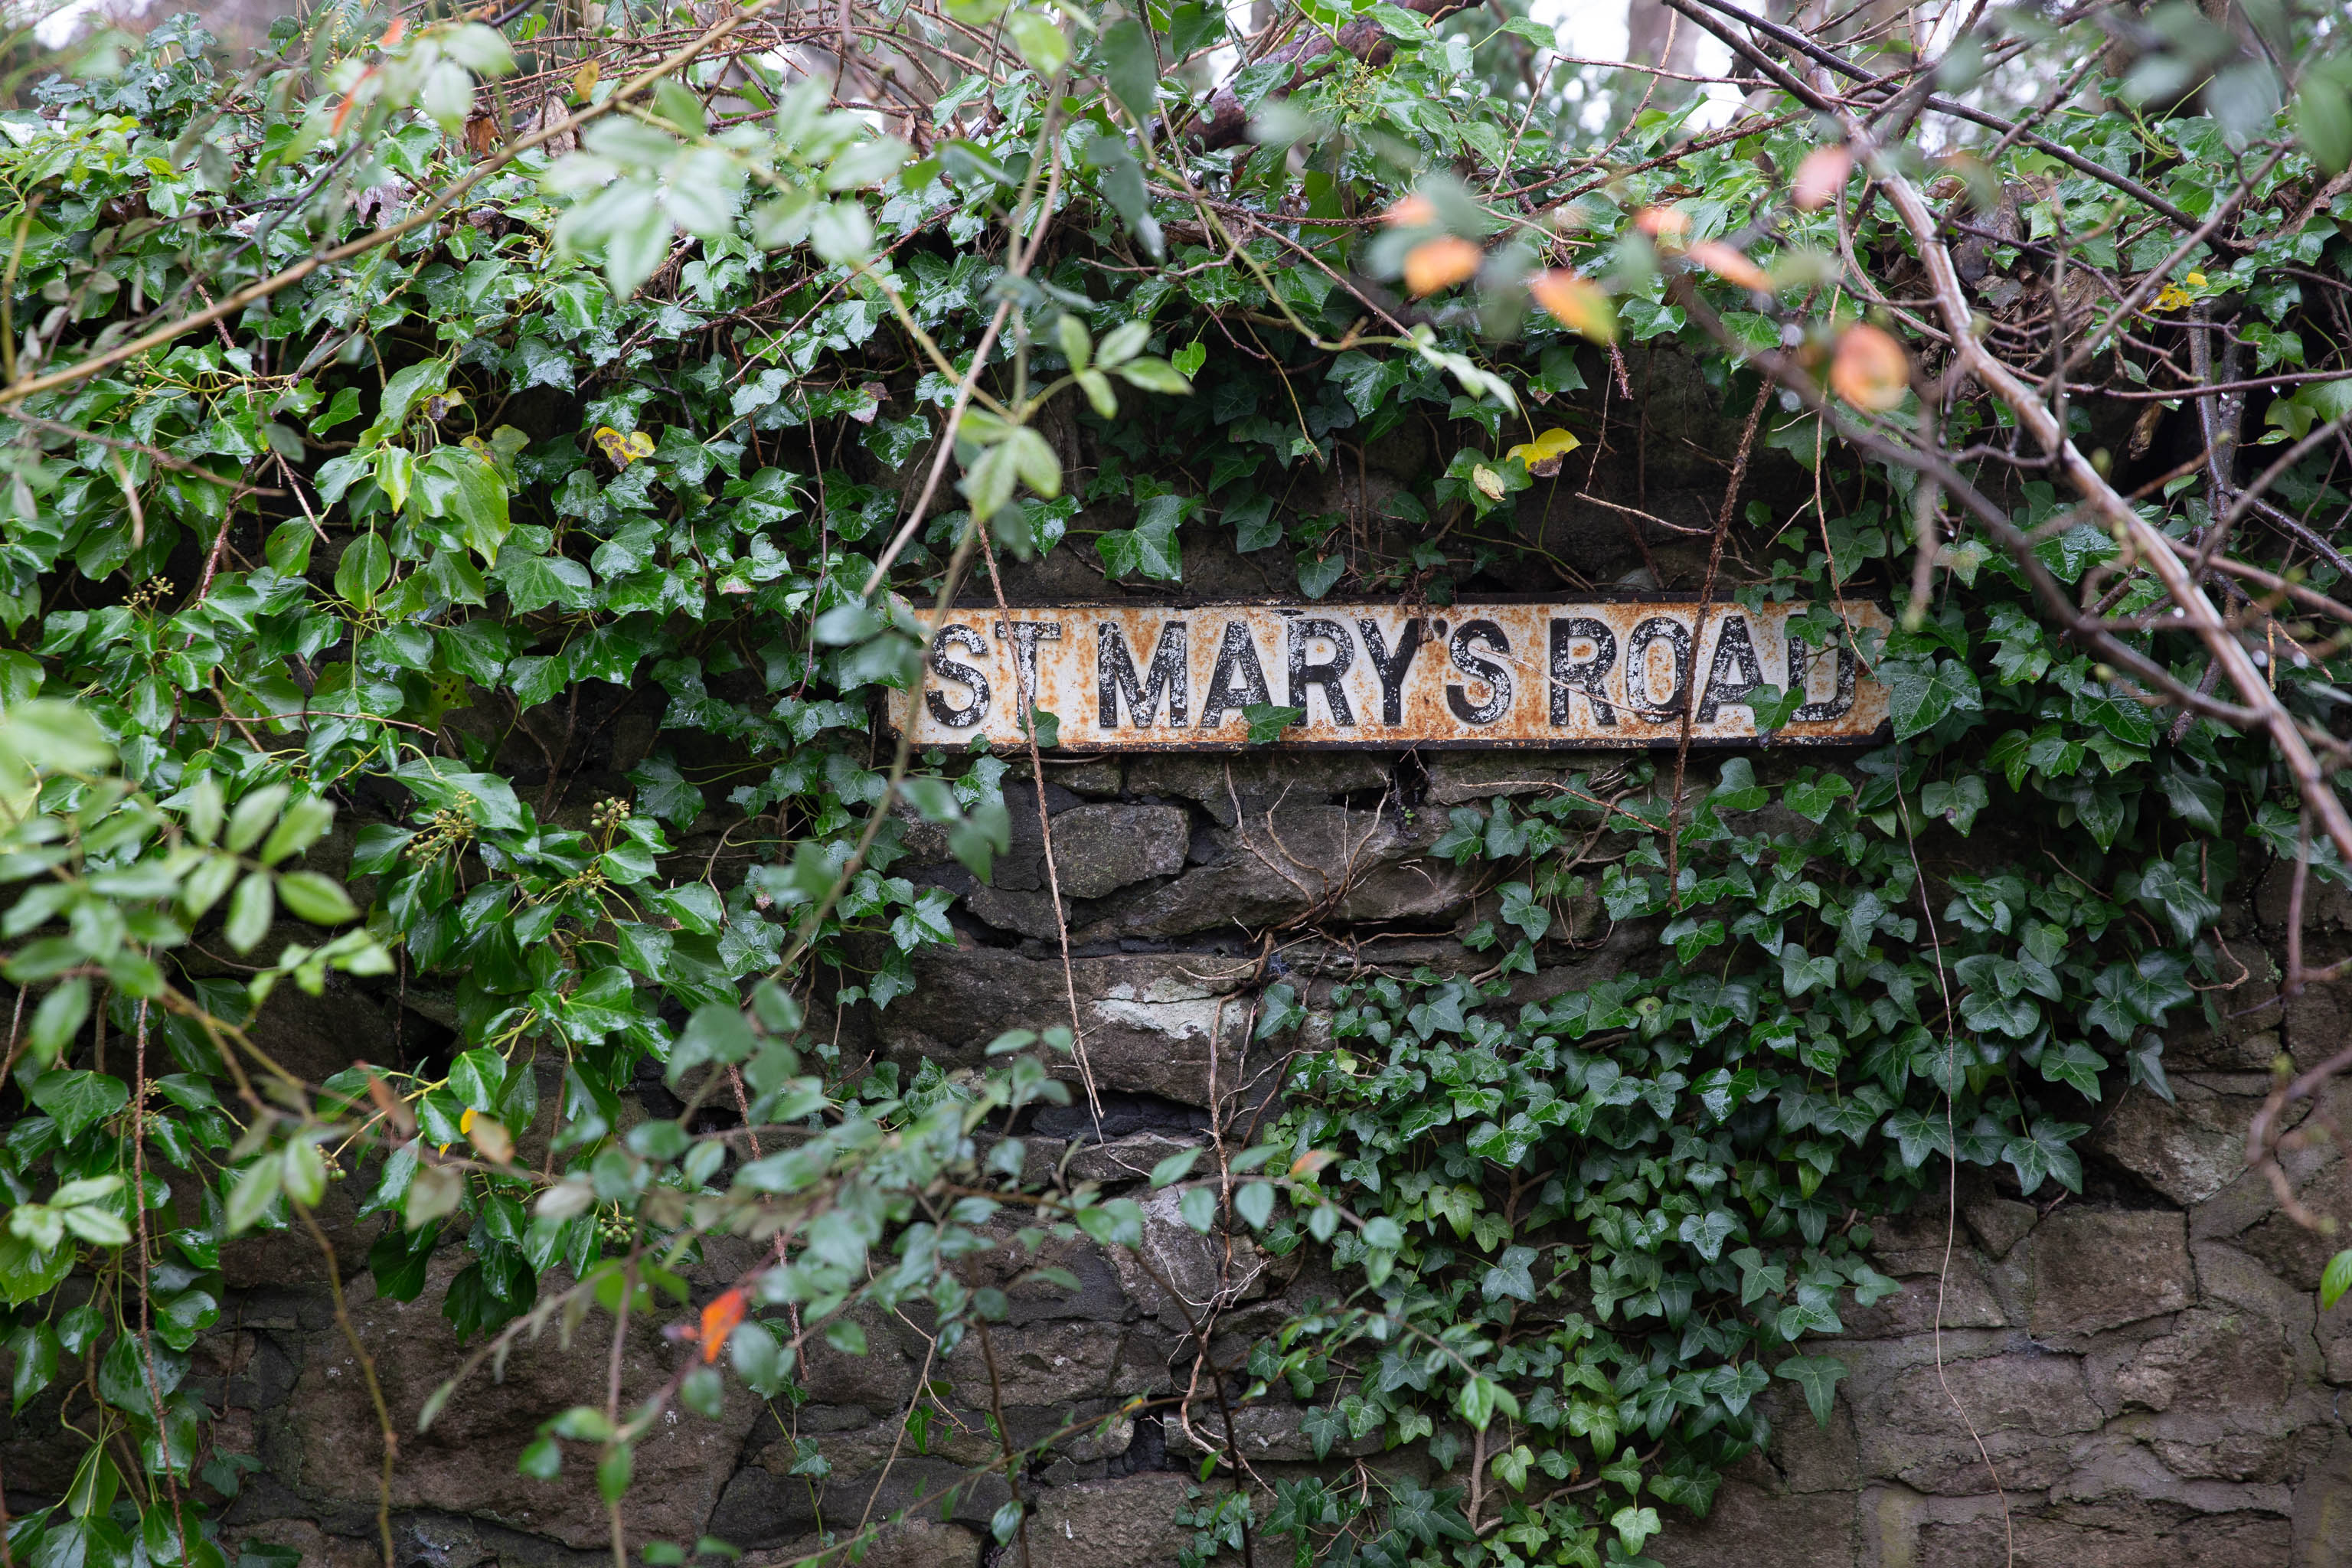 St Mary's Road
